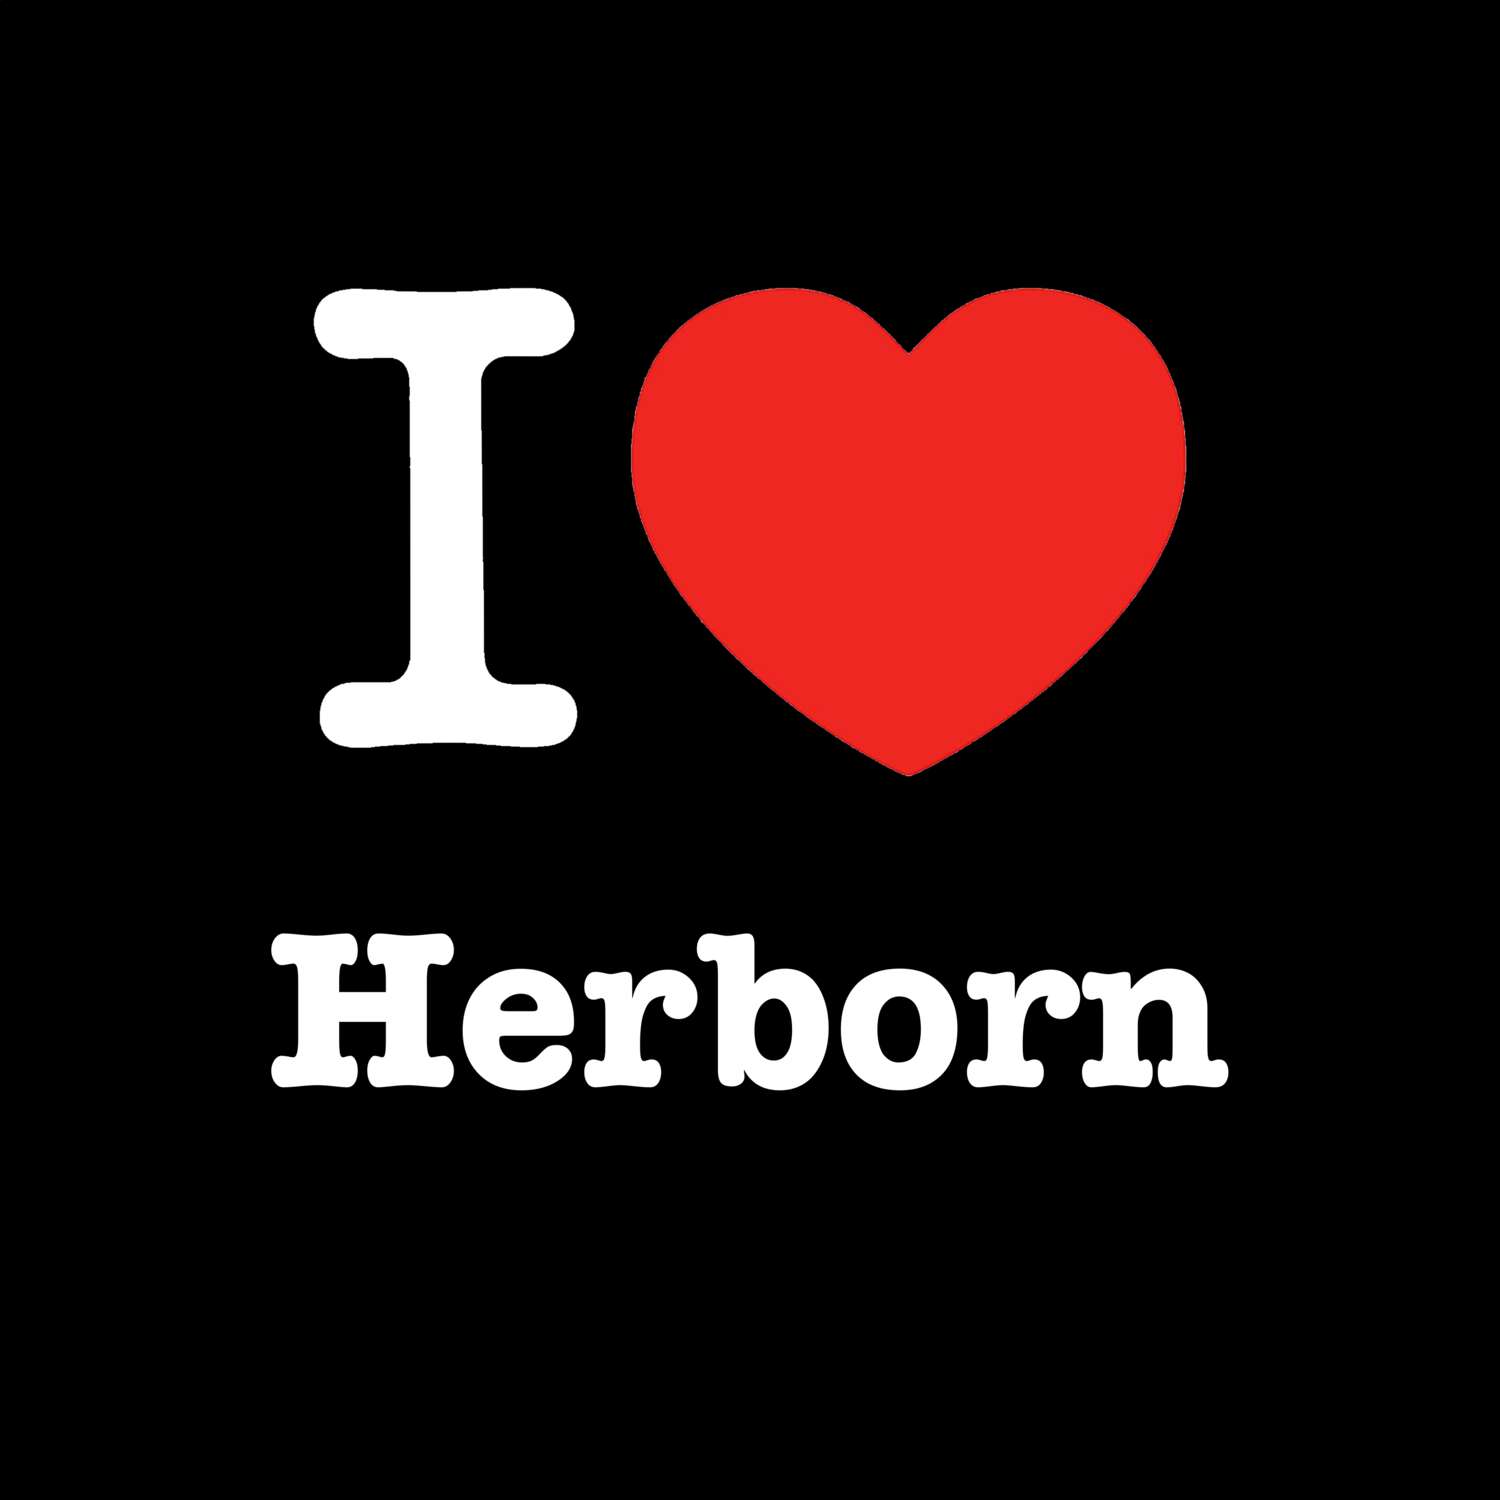 Herborn T-Shirt »I love«